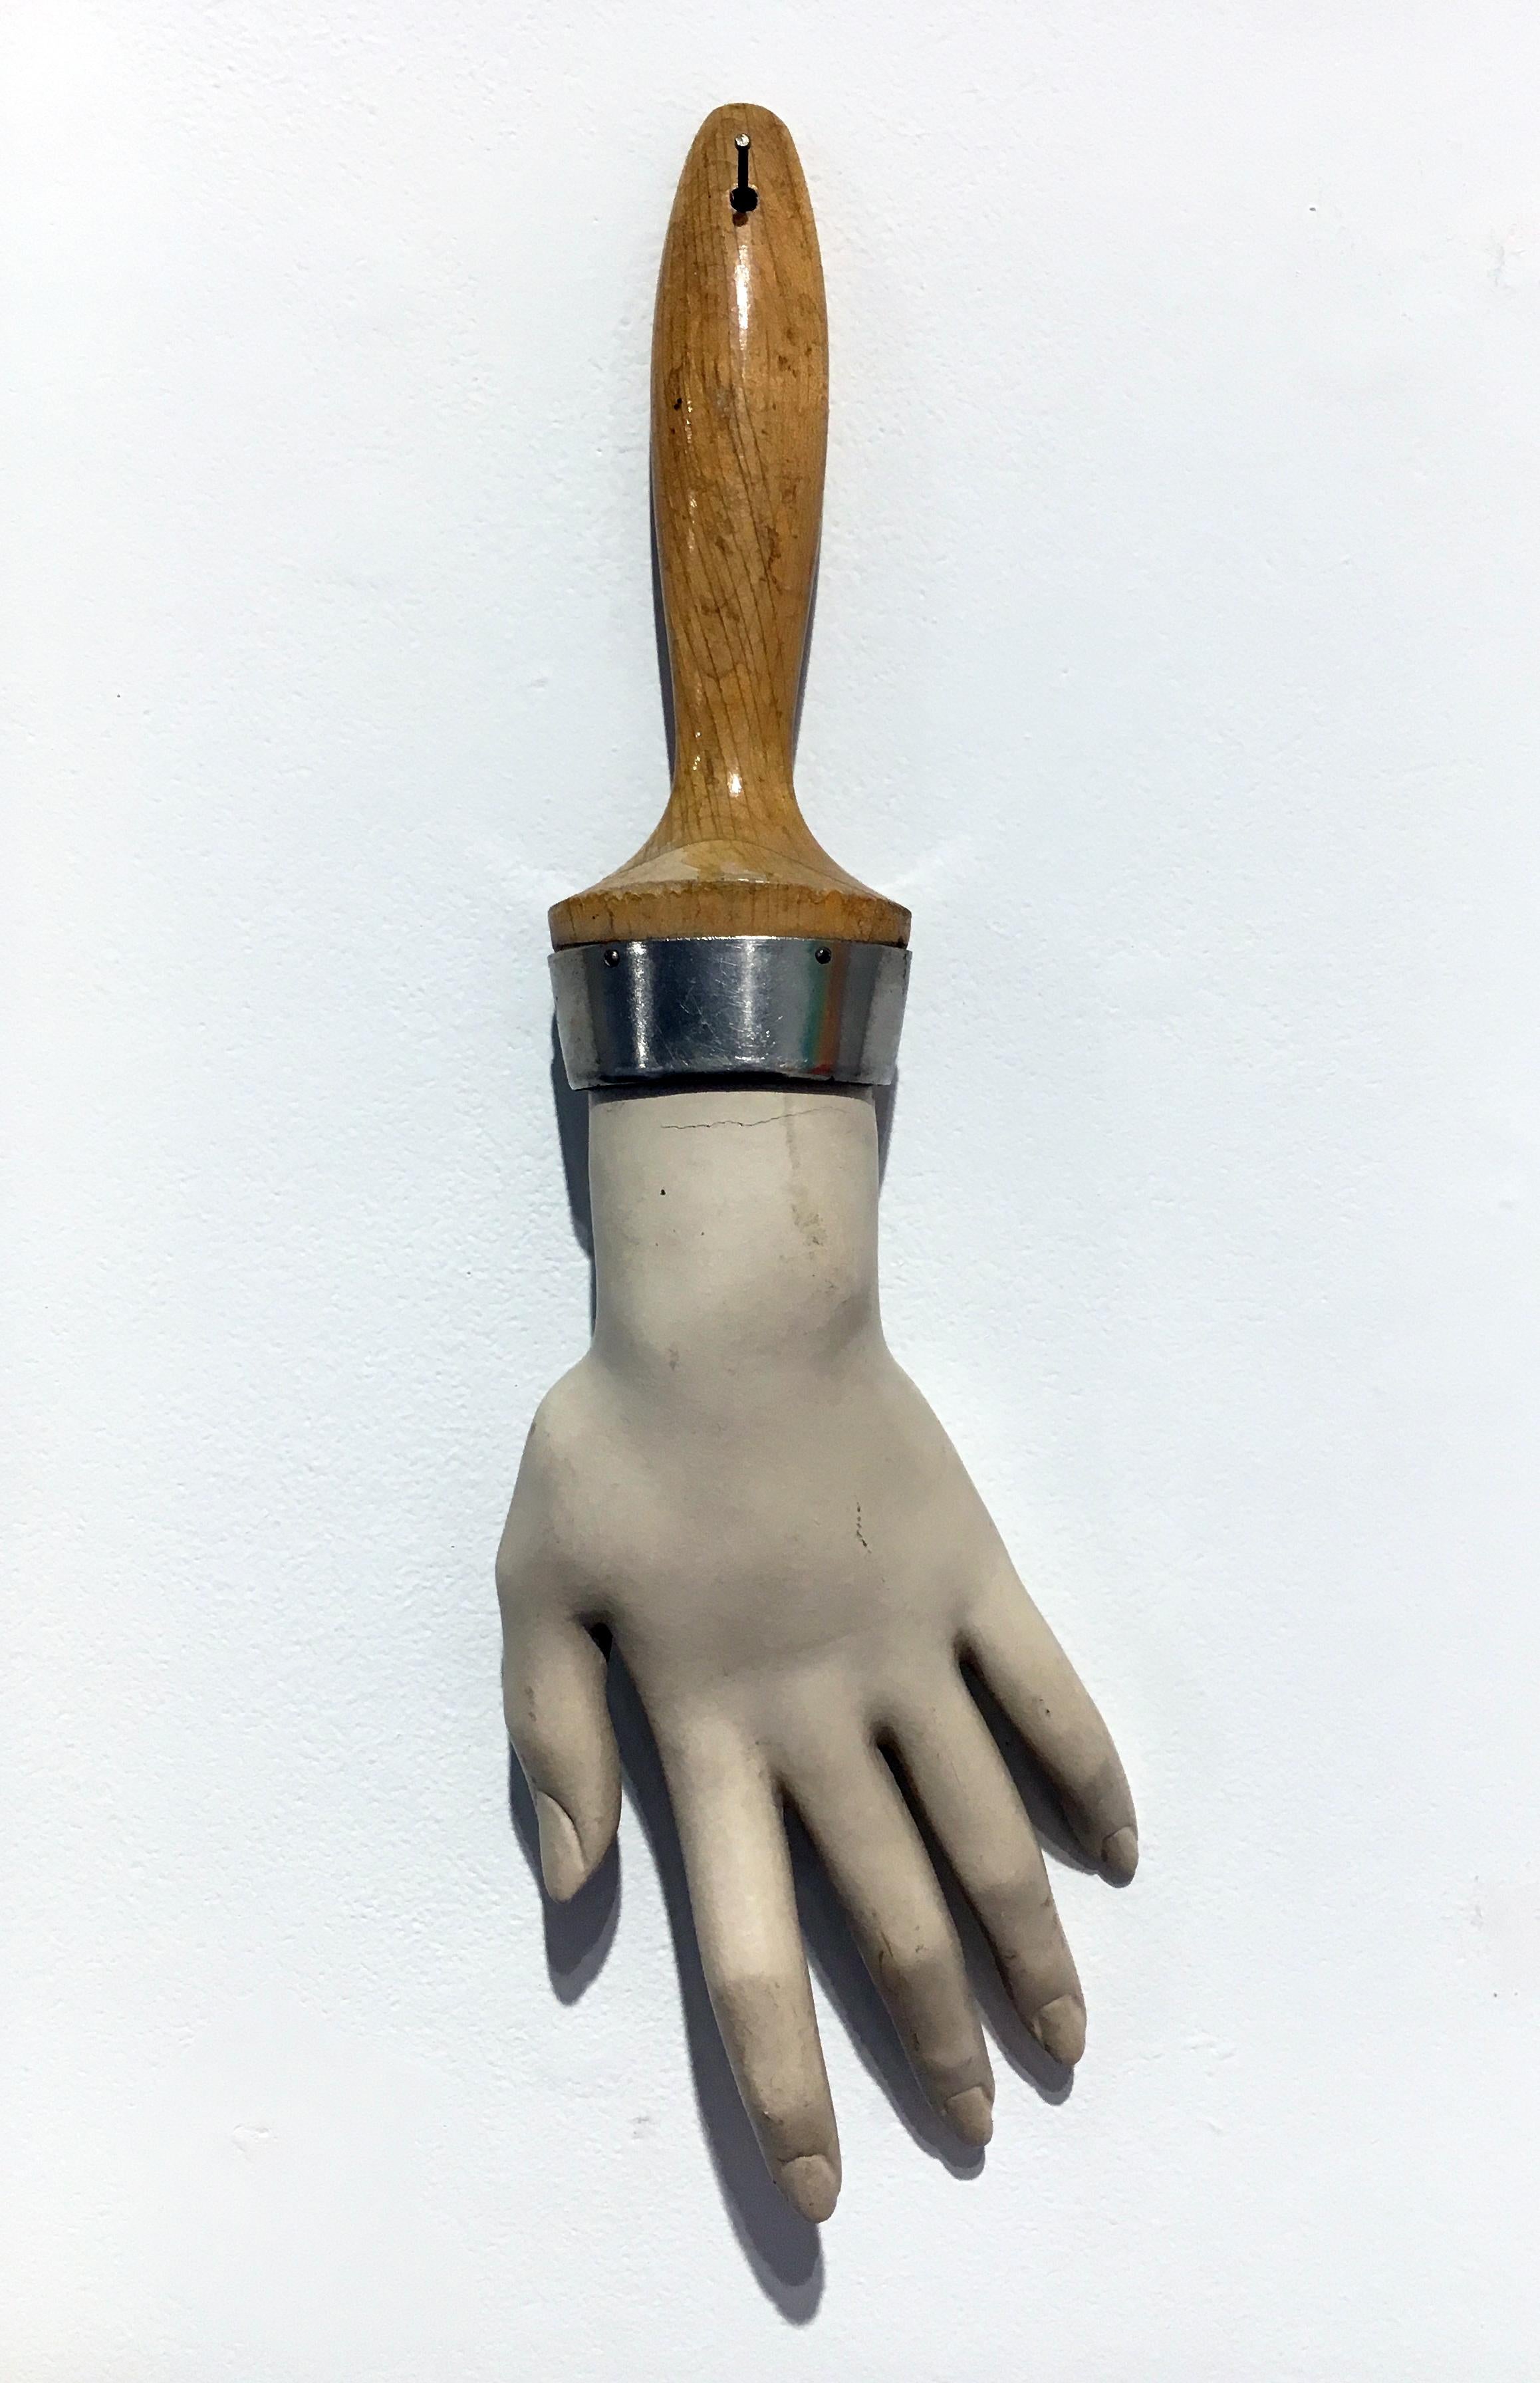 Howard Jones Figurative Sculpture - "Mannequin Hand Brush", Contemporary Surrealist Mixed Media Sculpture